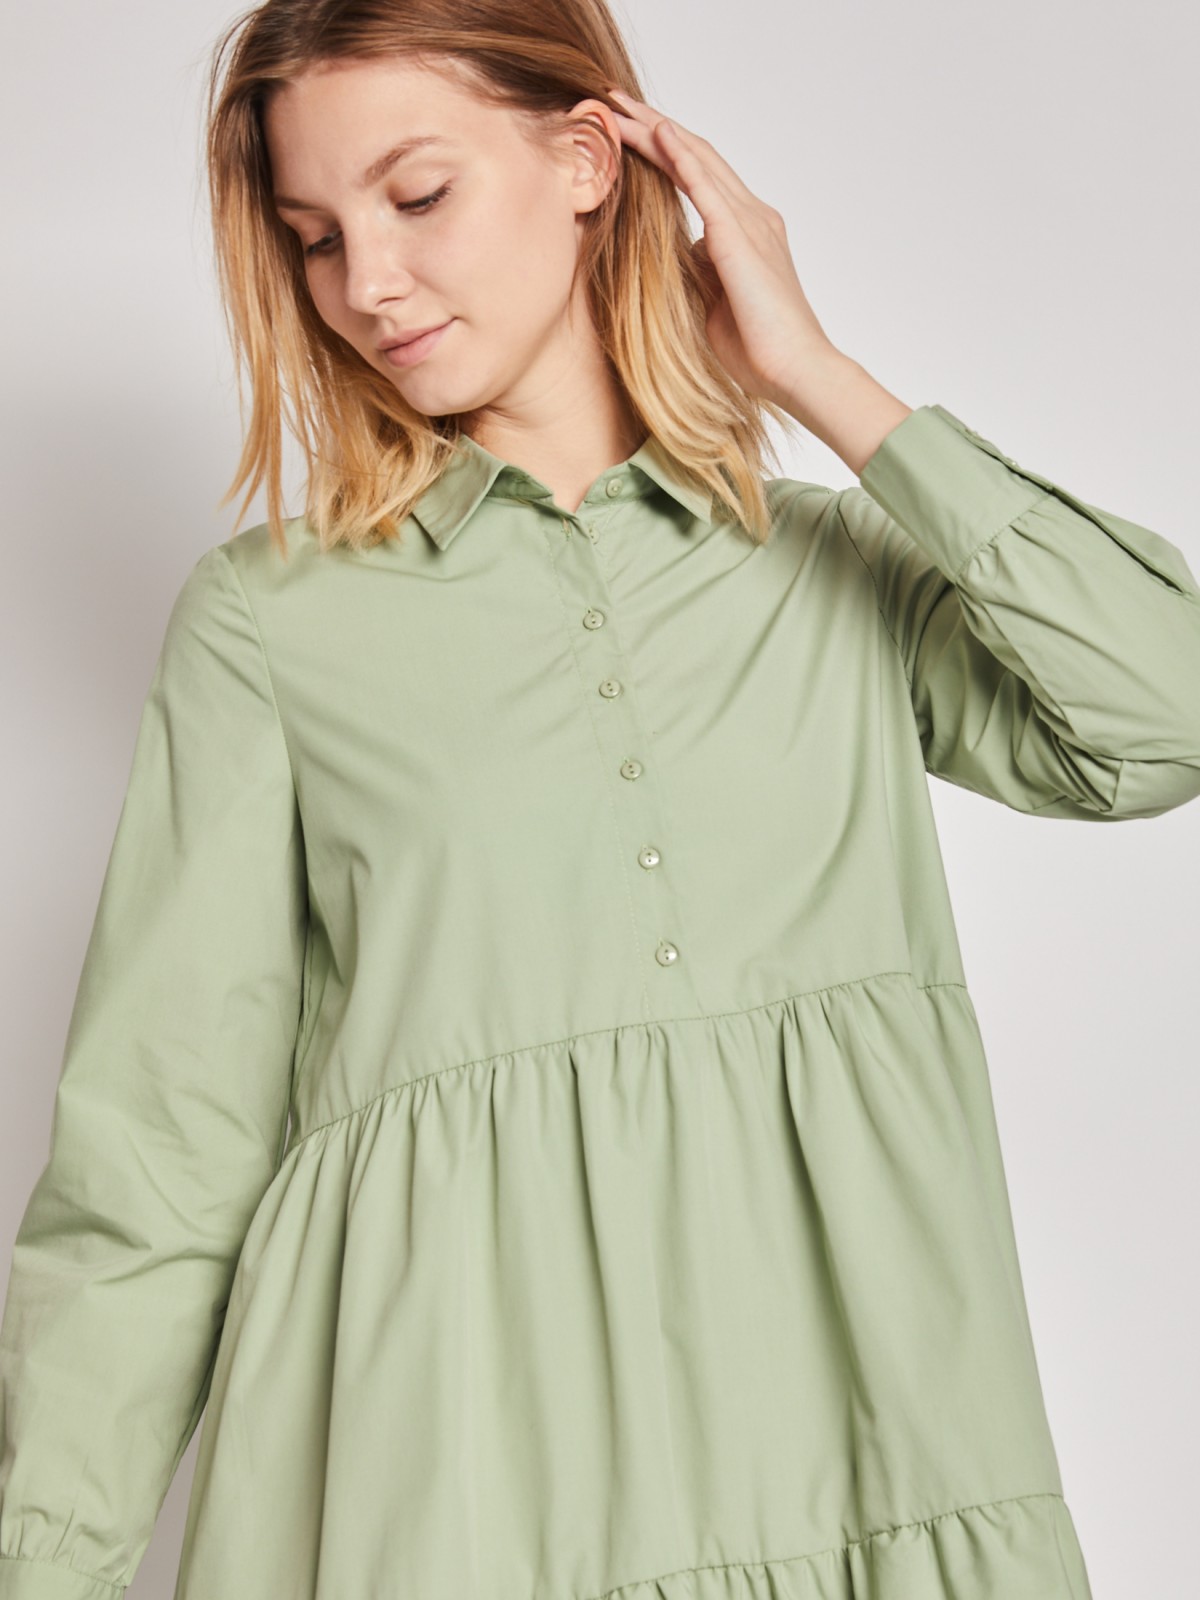 Ярусное платье-рубашка zolla 022138291223, цвет светло-зеленый, размер XS - фото 6